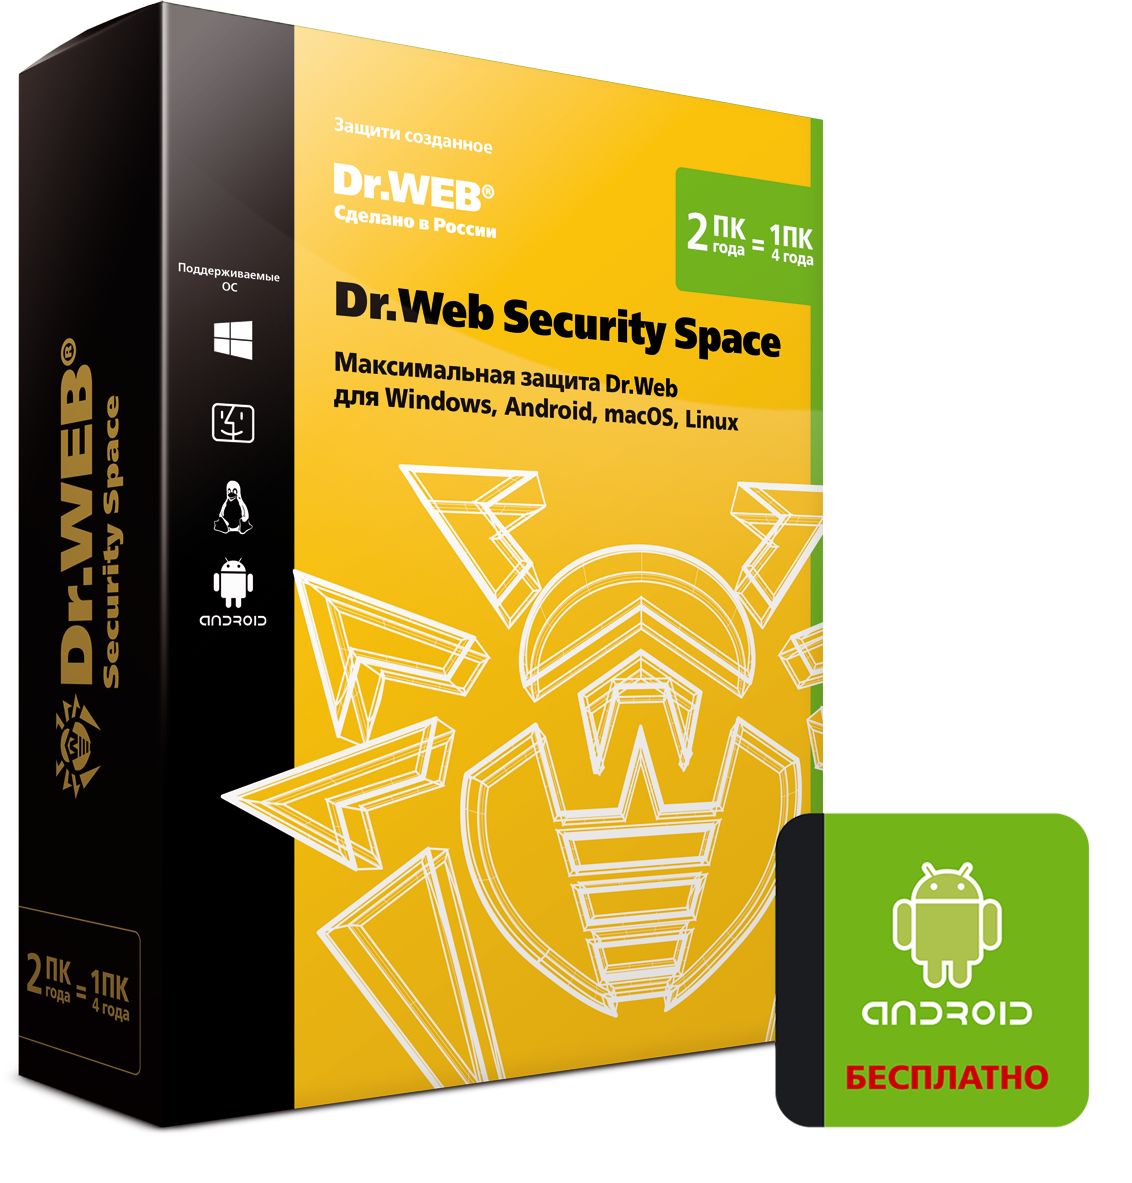 Антивирус Dr.Web Security Space на 2 года на 2 ПК BHW-B-24M-2-A3 (Box) антивирус drweb security space на 2 года на 2 пк [lhw bk 24m 2 a3] электронный ключ